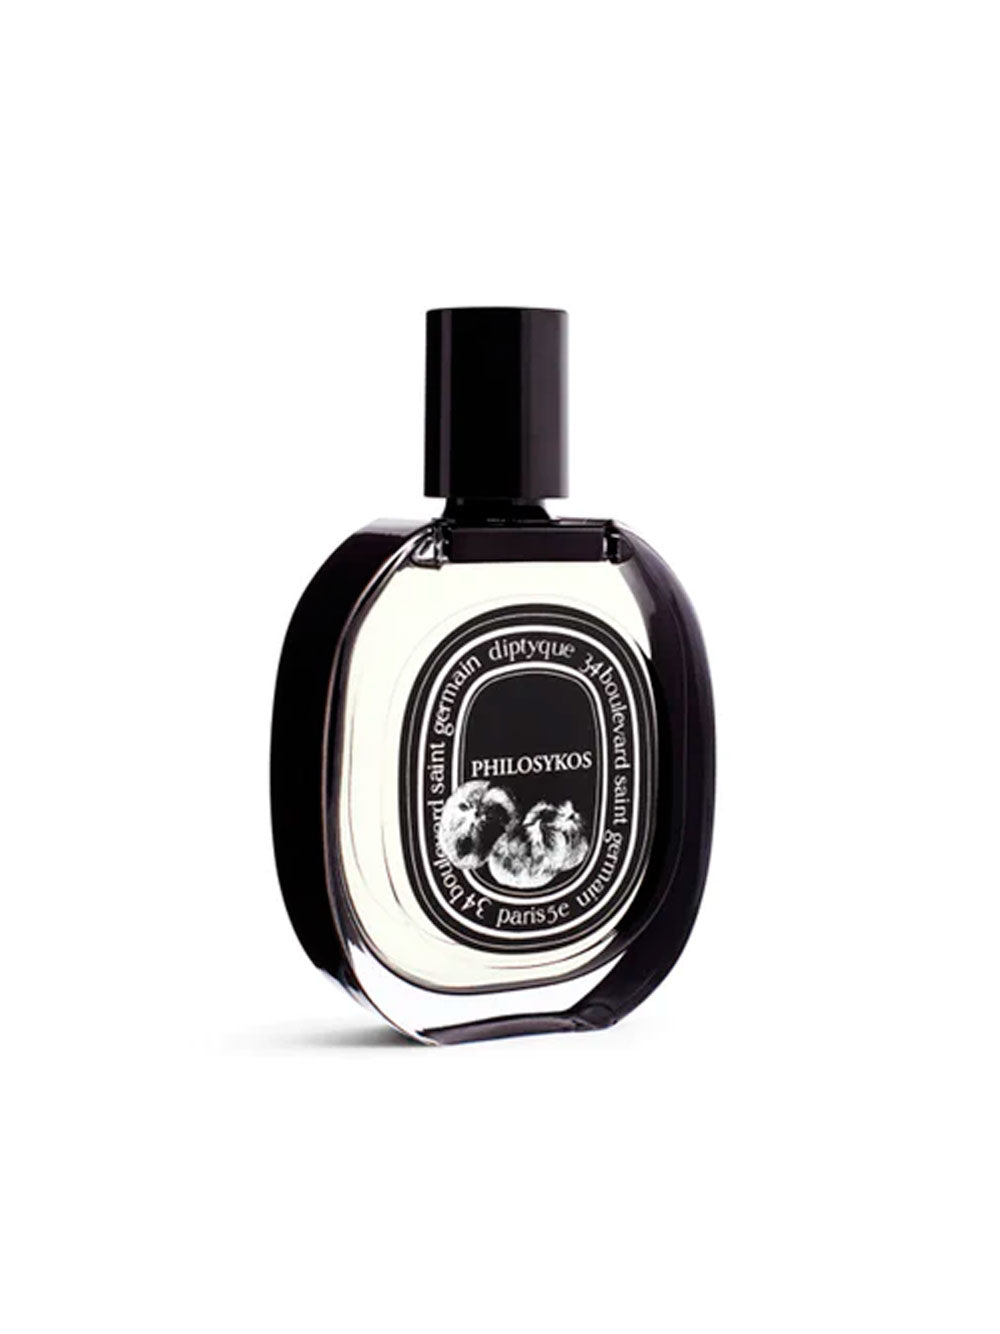 Perfume Philosykos 75ml